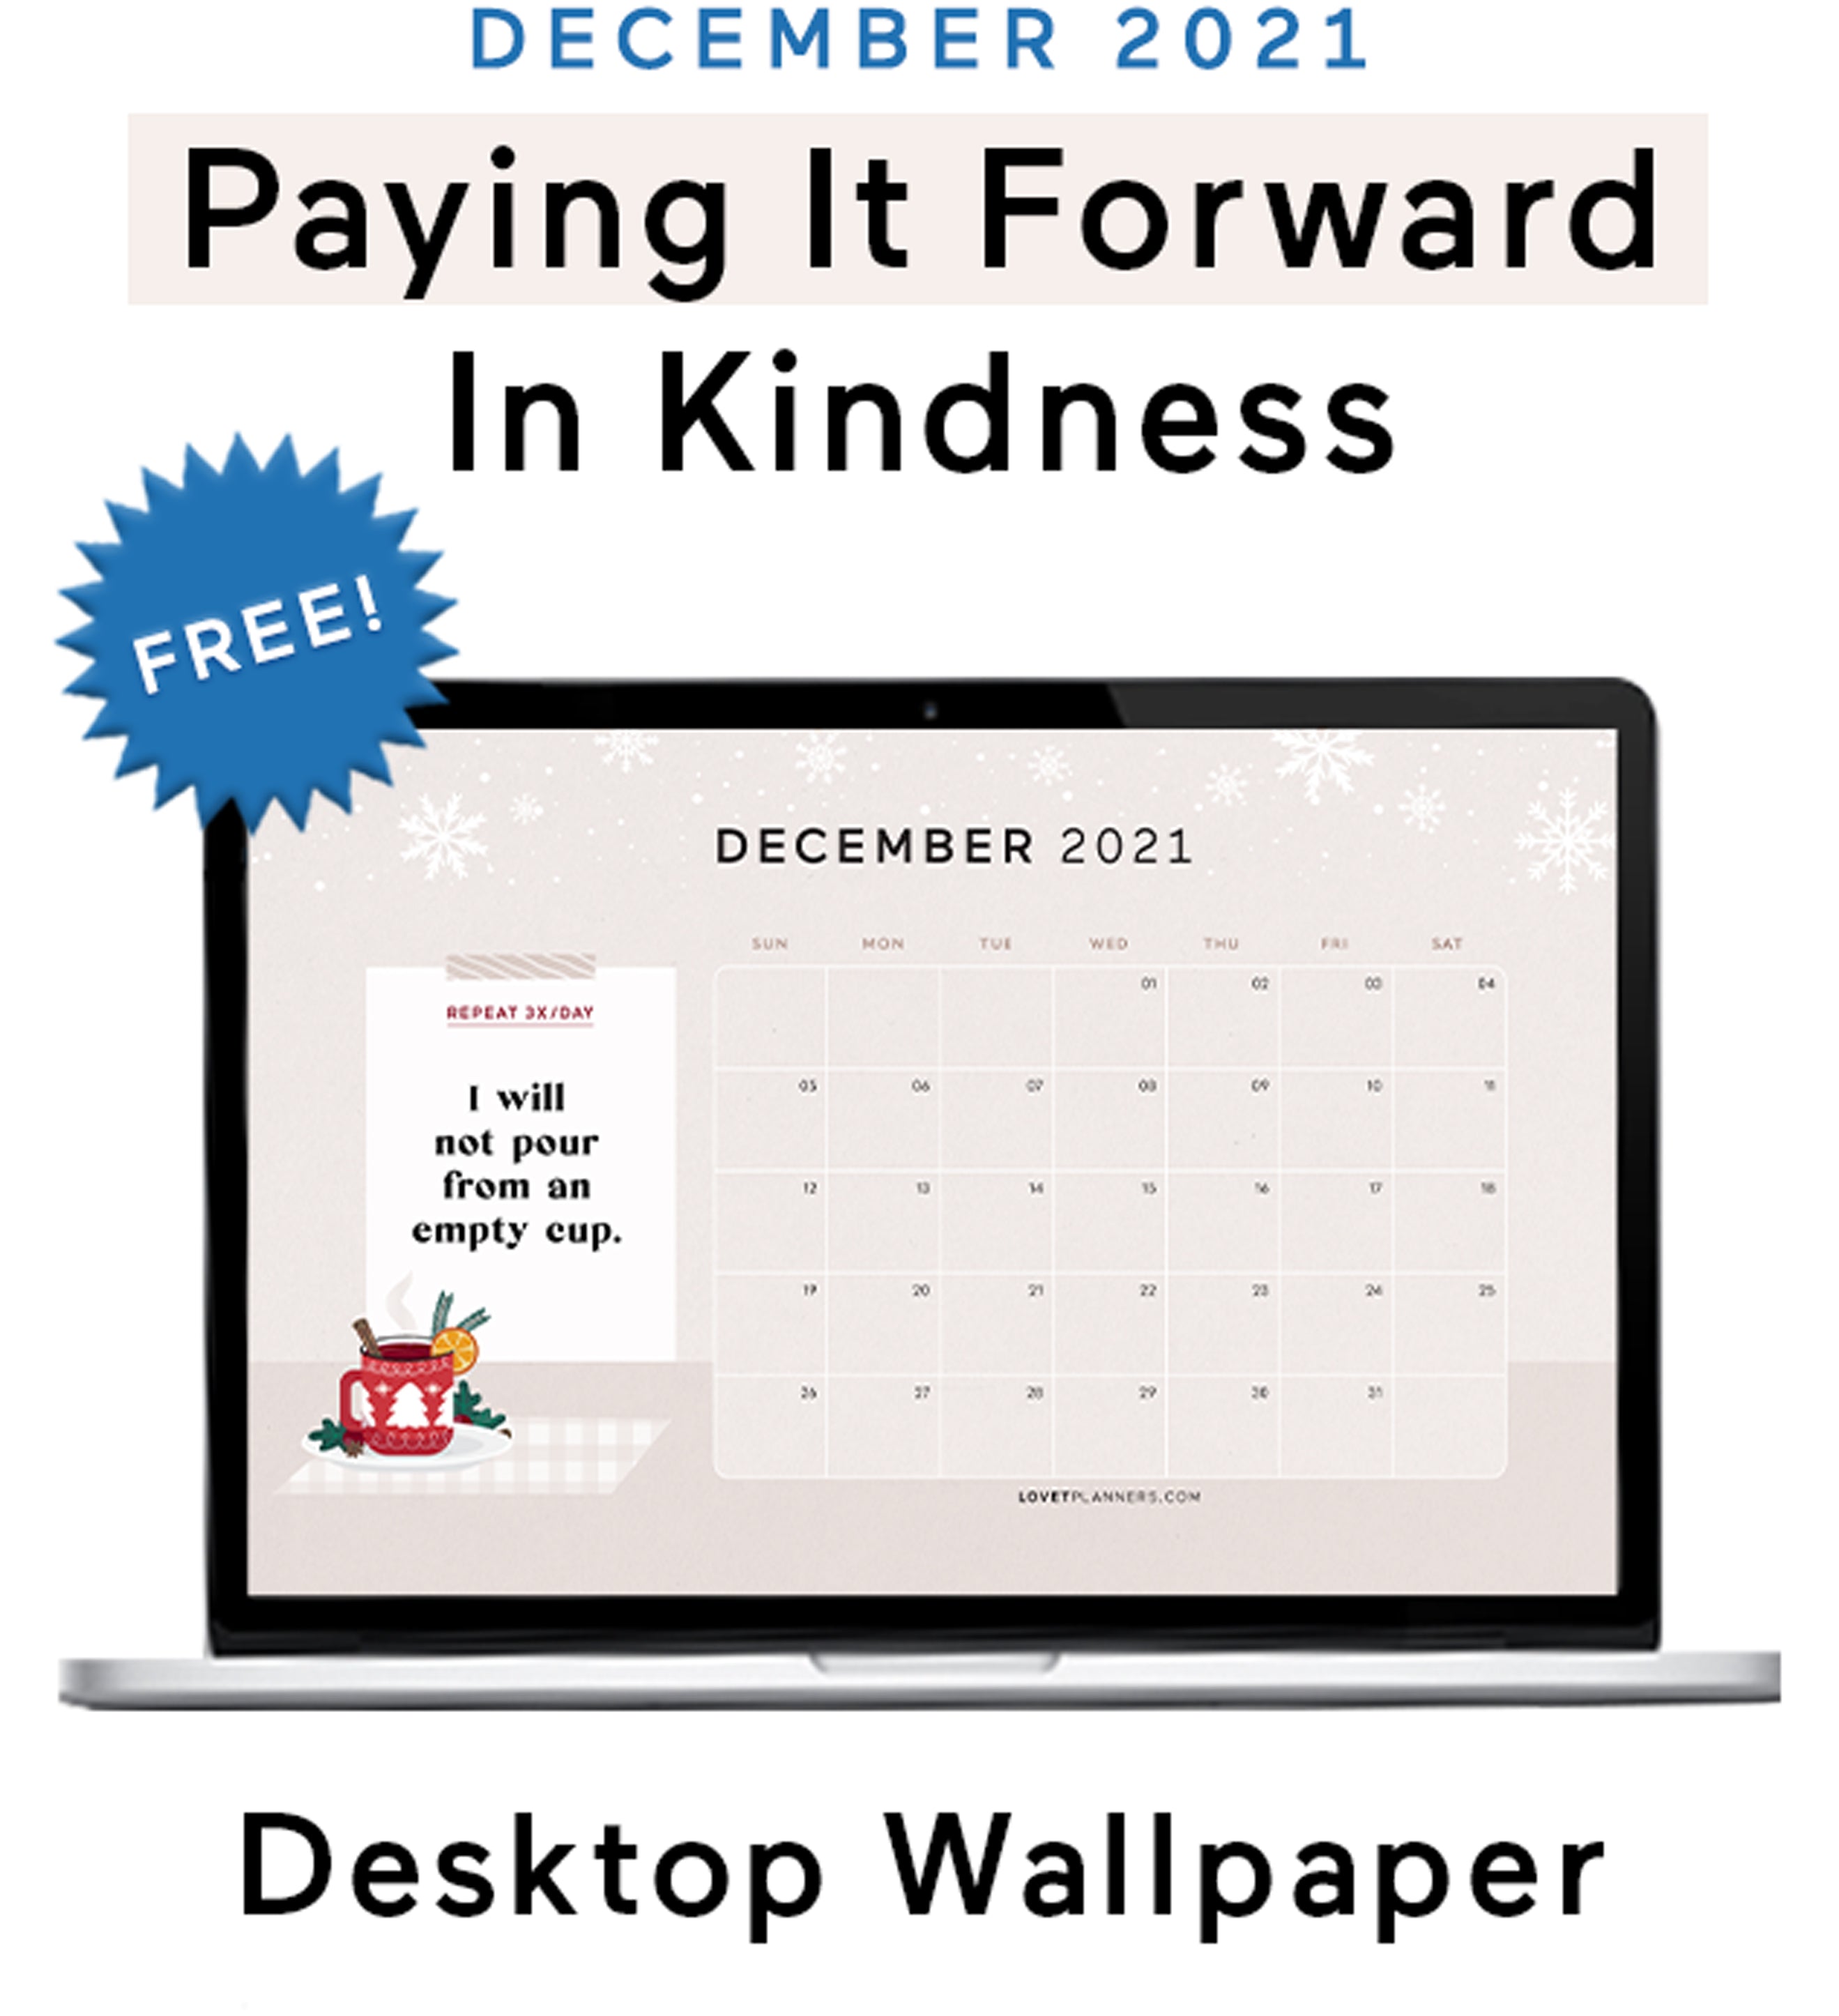 December wallpaper download on laptop